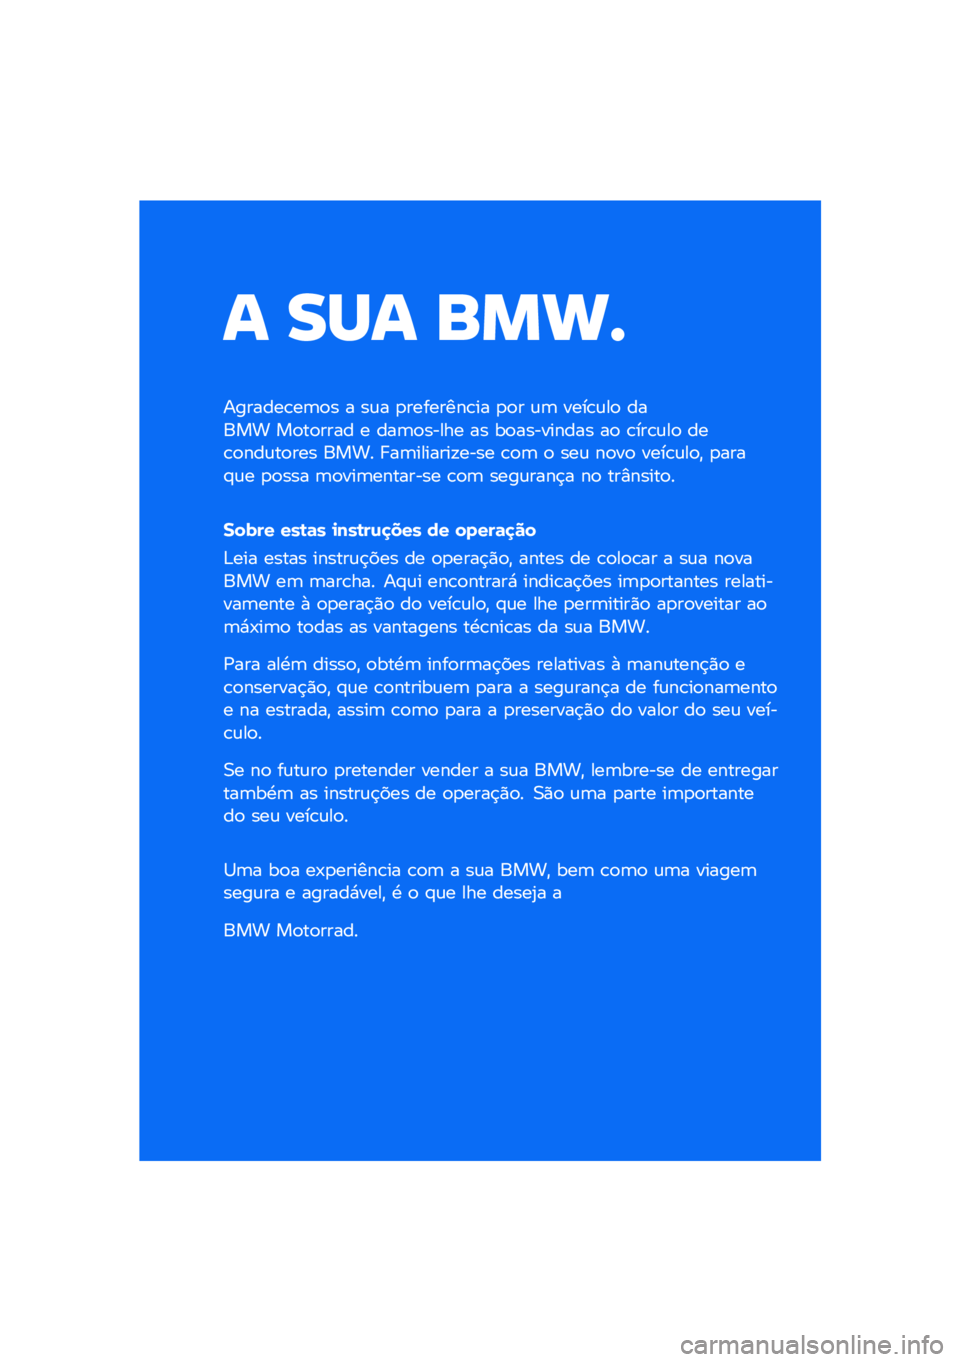 BMW MOTORRAD C 400 GT 2020  Manual do condutor (in Portuguese) � ��� ����\b
�������\b��	�
� � ��\f� �
��������\b�� �
�
� �\f�	 ����\b�\f��
 ����� ��
��
���� � ���	�
����� �� ��
��������� ��
 �\b���